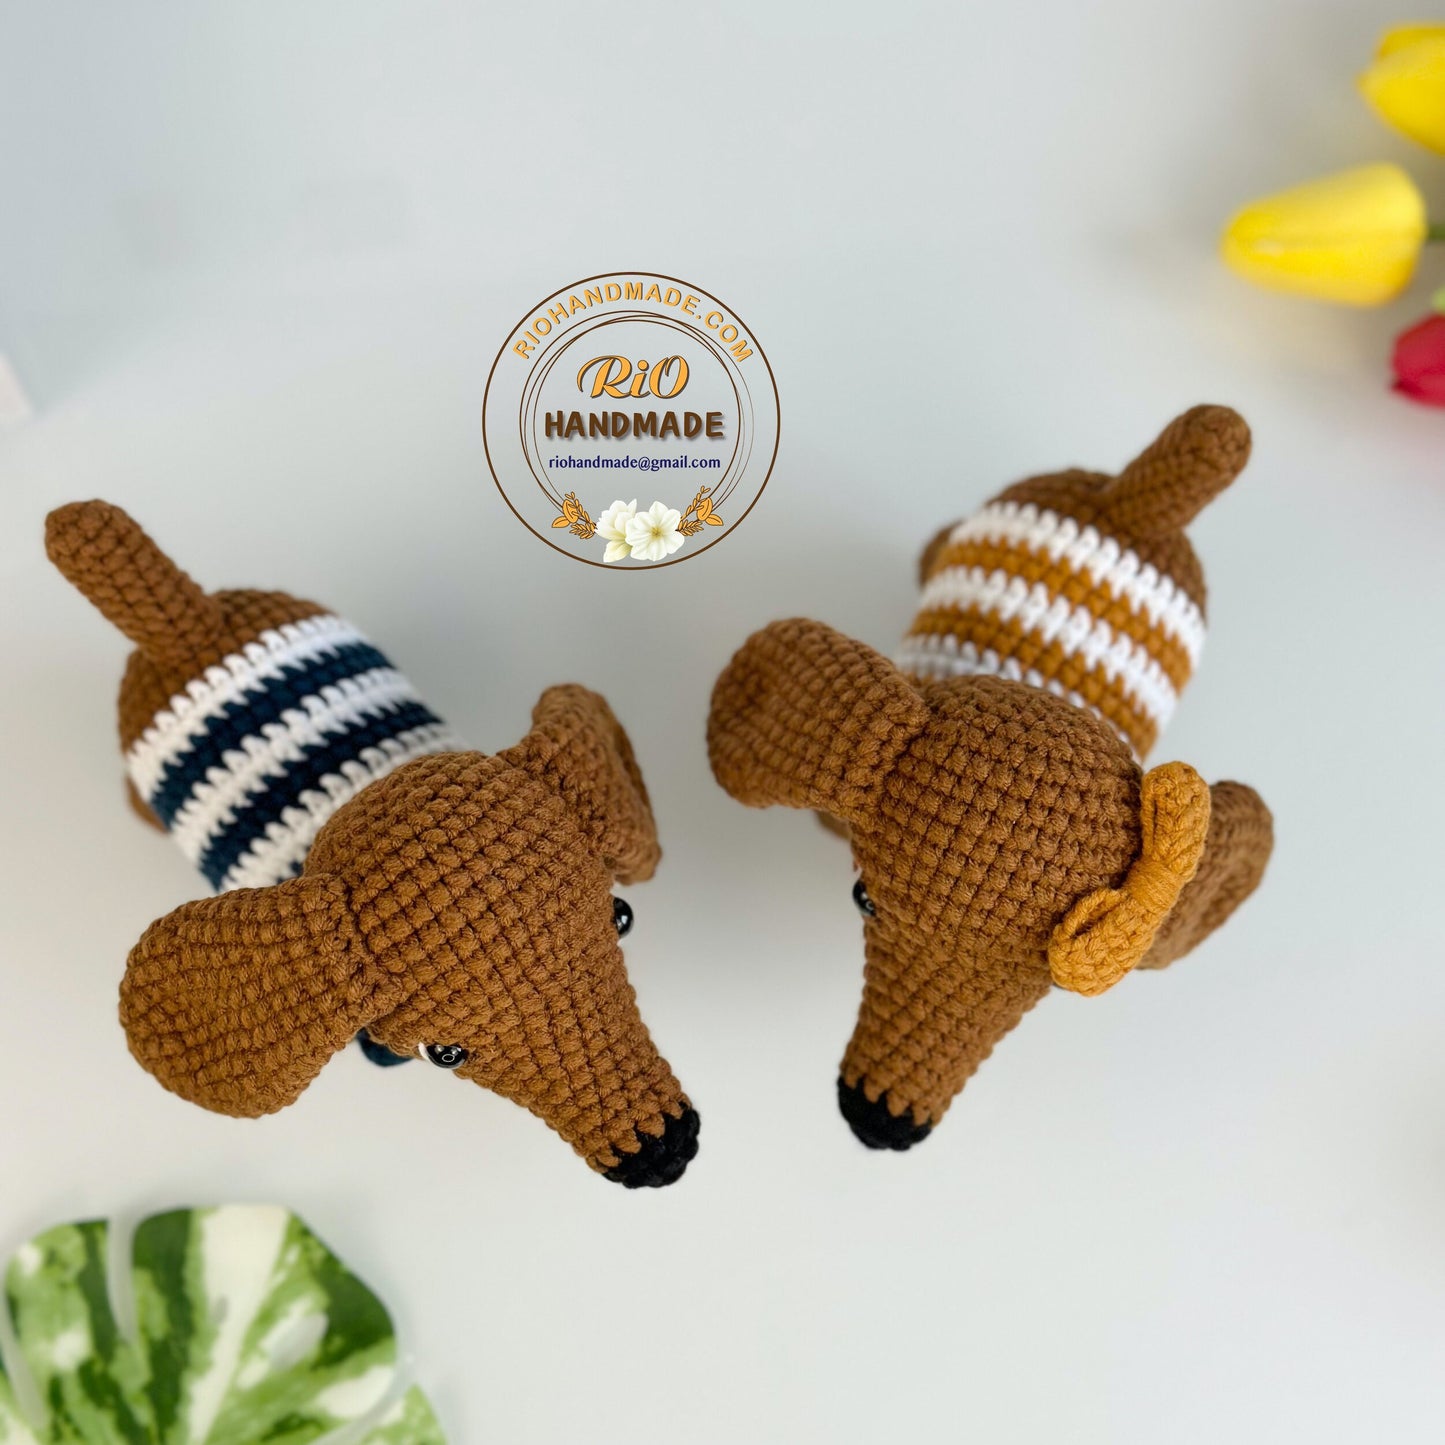 Handmade Dachshund Dog crochet, amigurumi Dachshund plush,home decor, toy for kid, perfect idea for gifts, present, craft doll